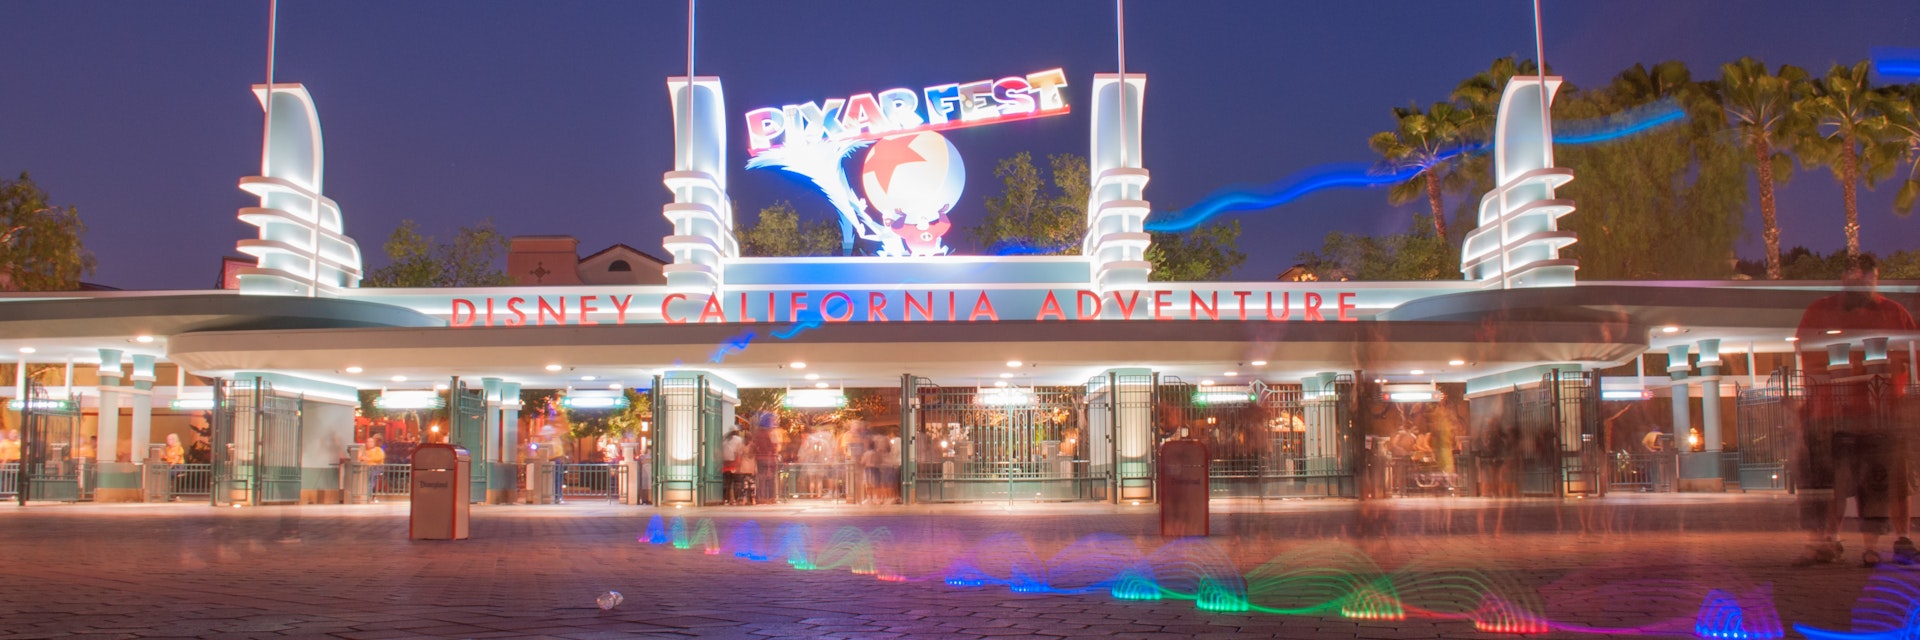 Celebrating Pixar fest happening at Disney California Adventure in June 2018.